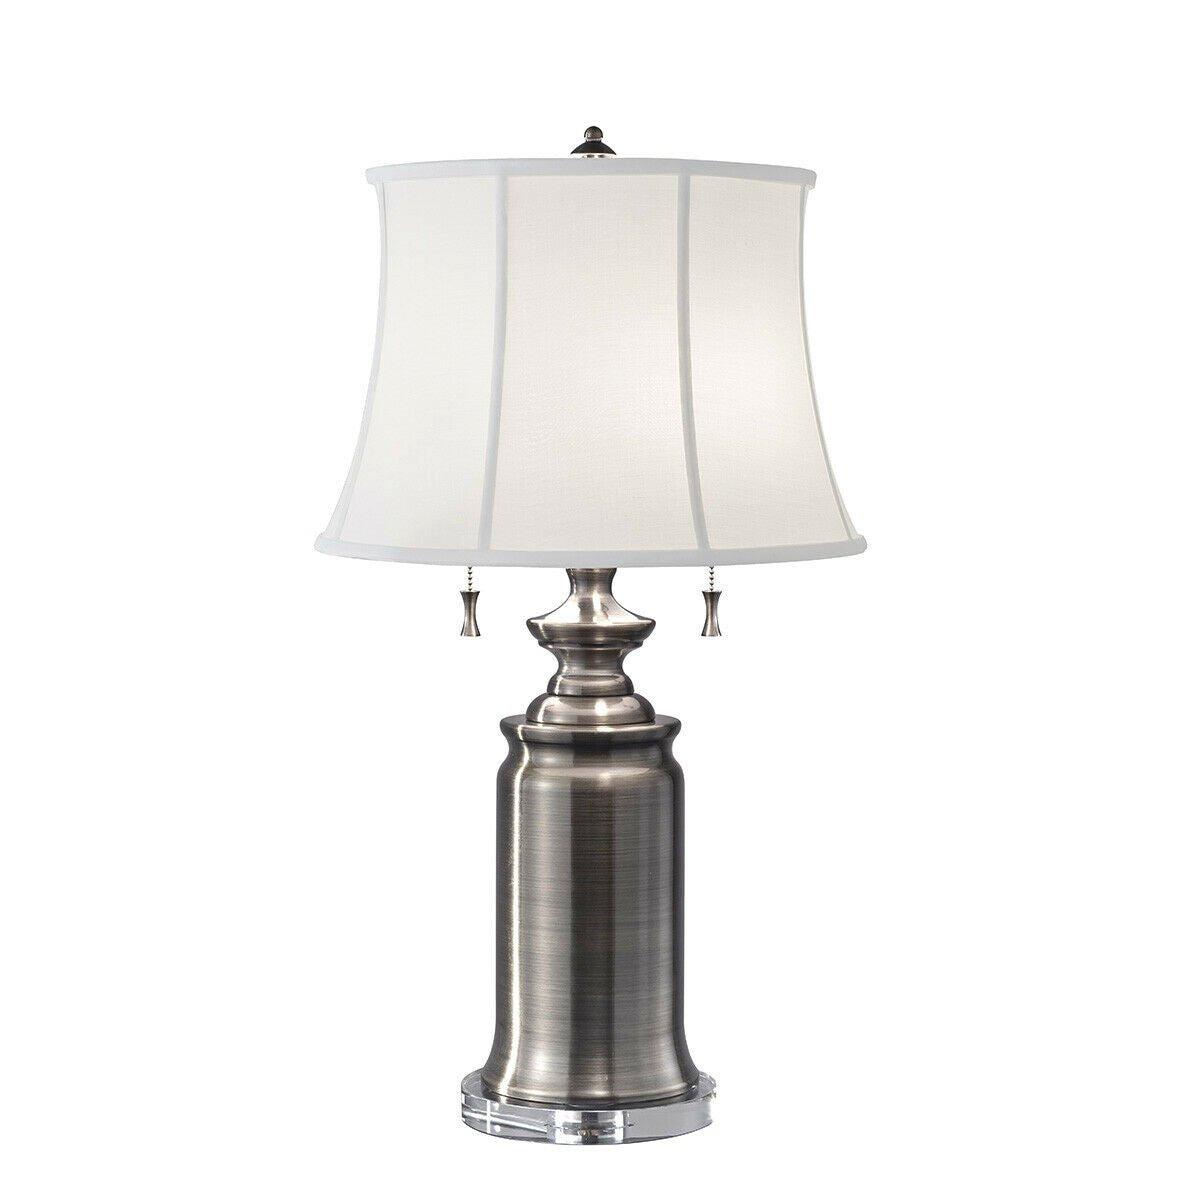 2 Bulb Twin Table Lamp True White Cotton Linen SHade Antique Nickel LED E27 60W